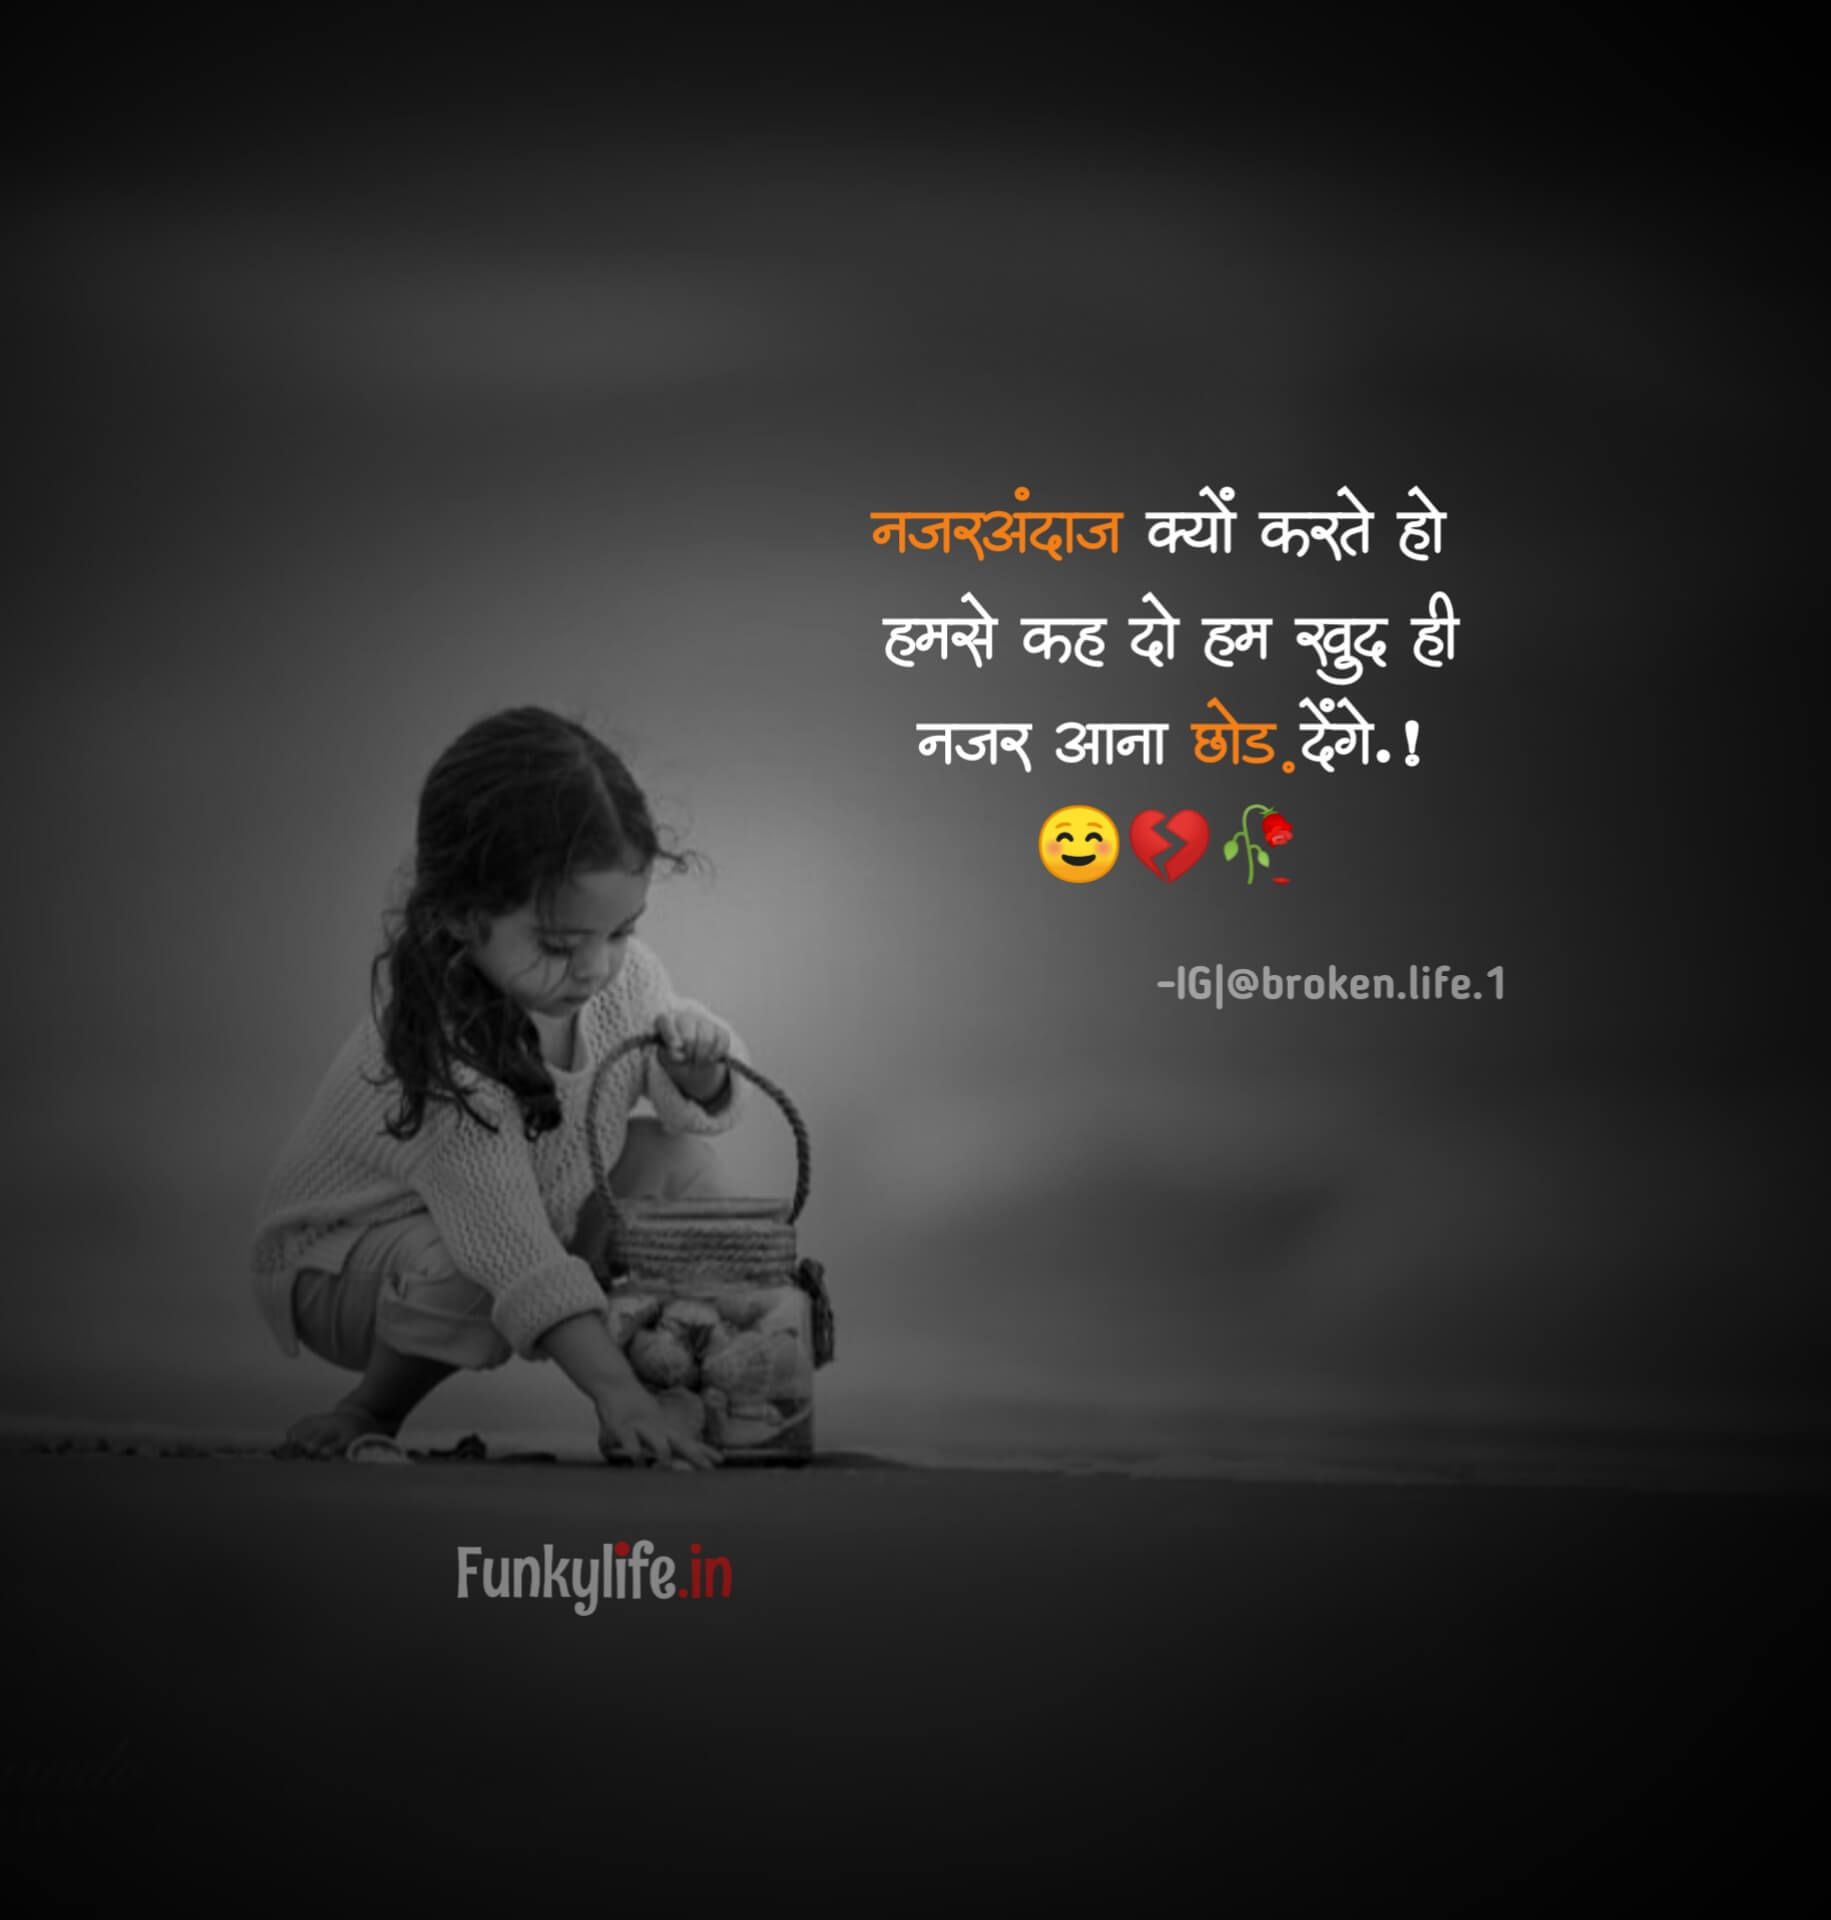 Sad Shayari with Images | TOP [50+] सैड शायरी Status In Hindi